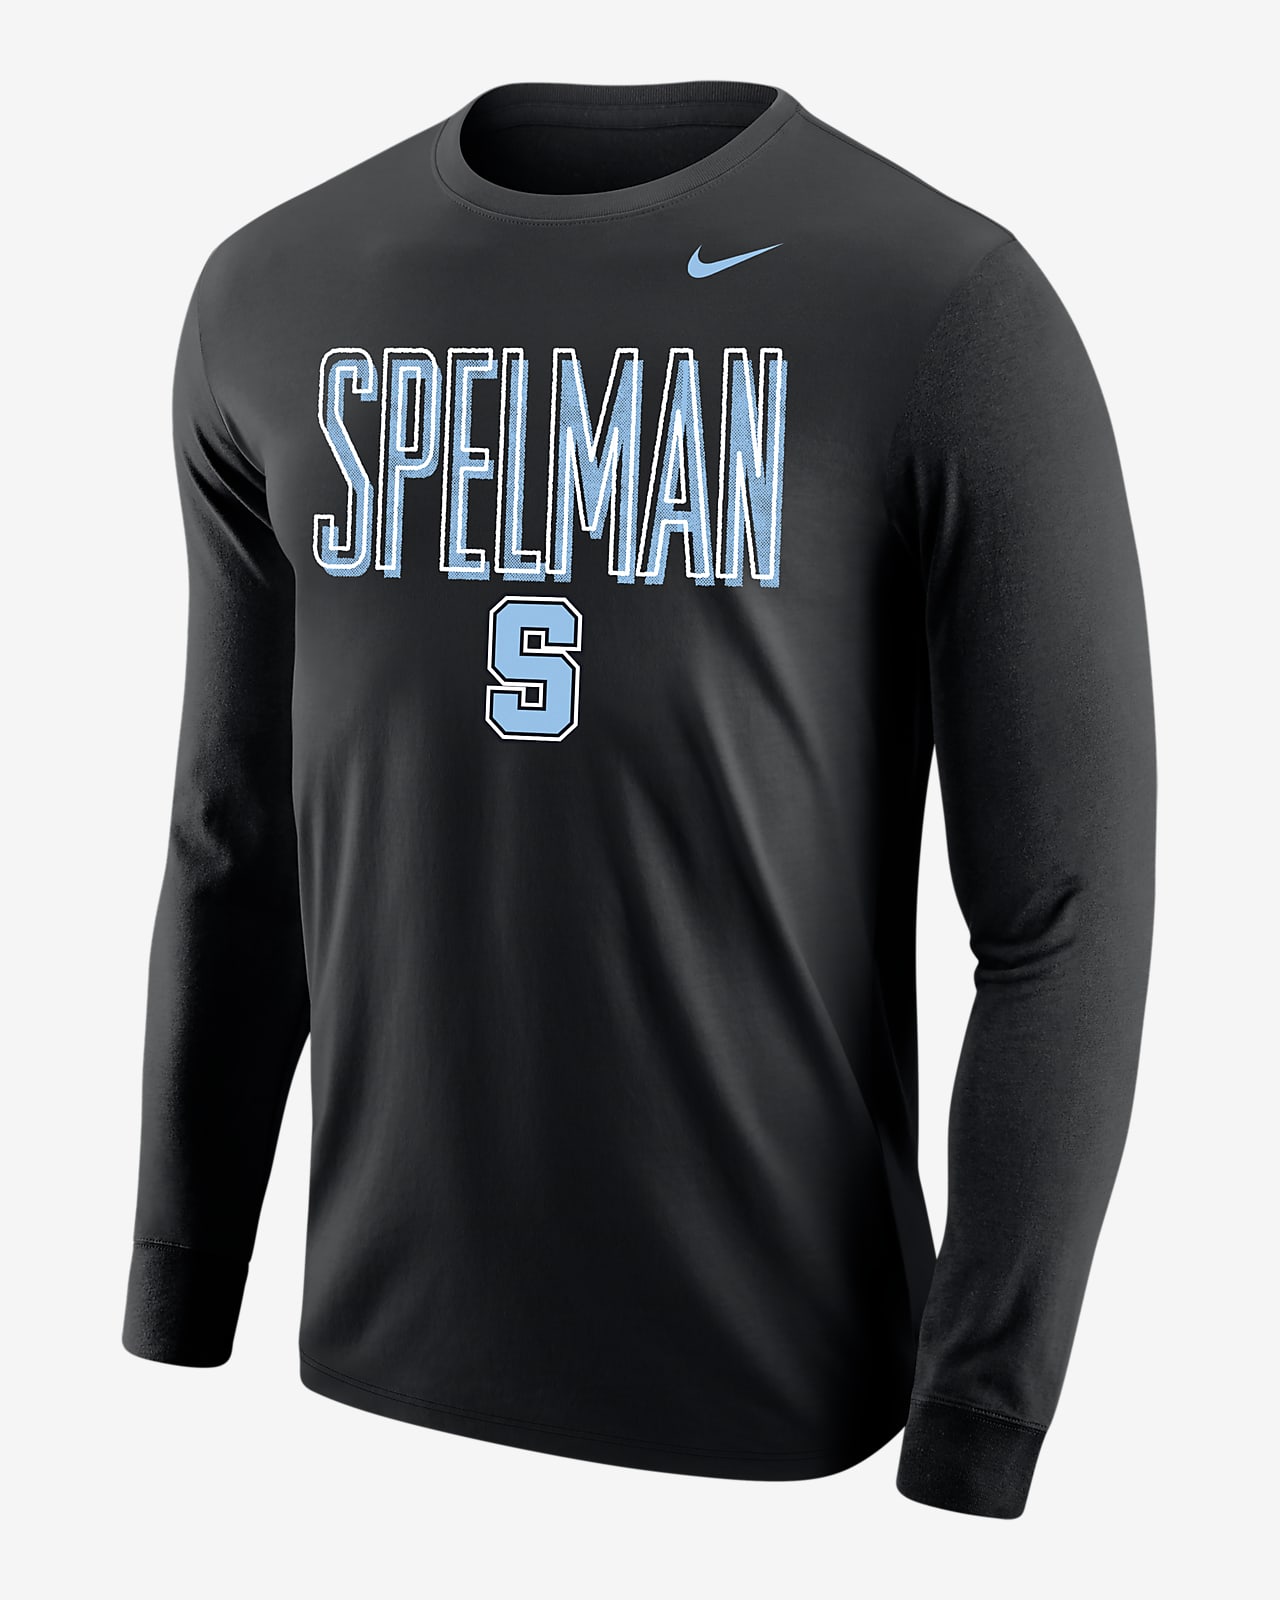 Nike College (Spelman College) Men's Long-Sleeve T-Shirt